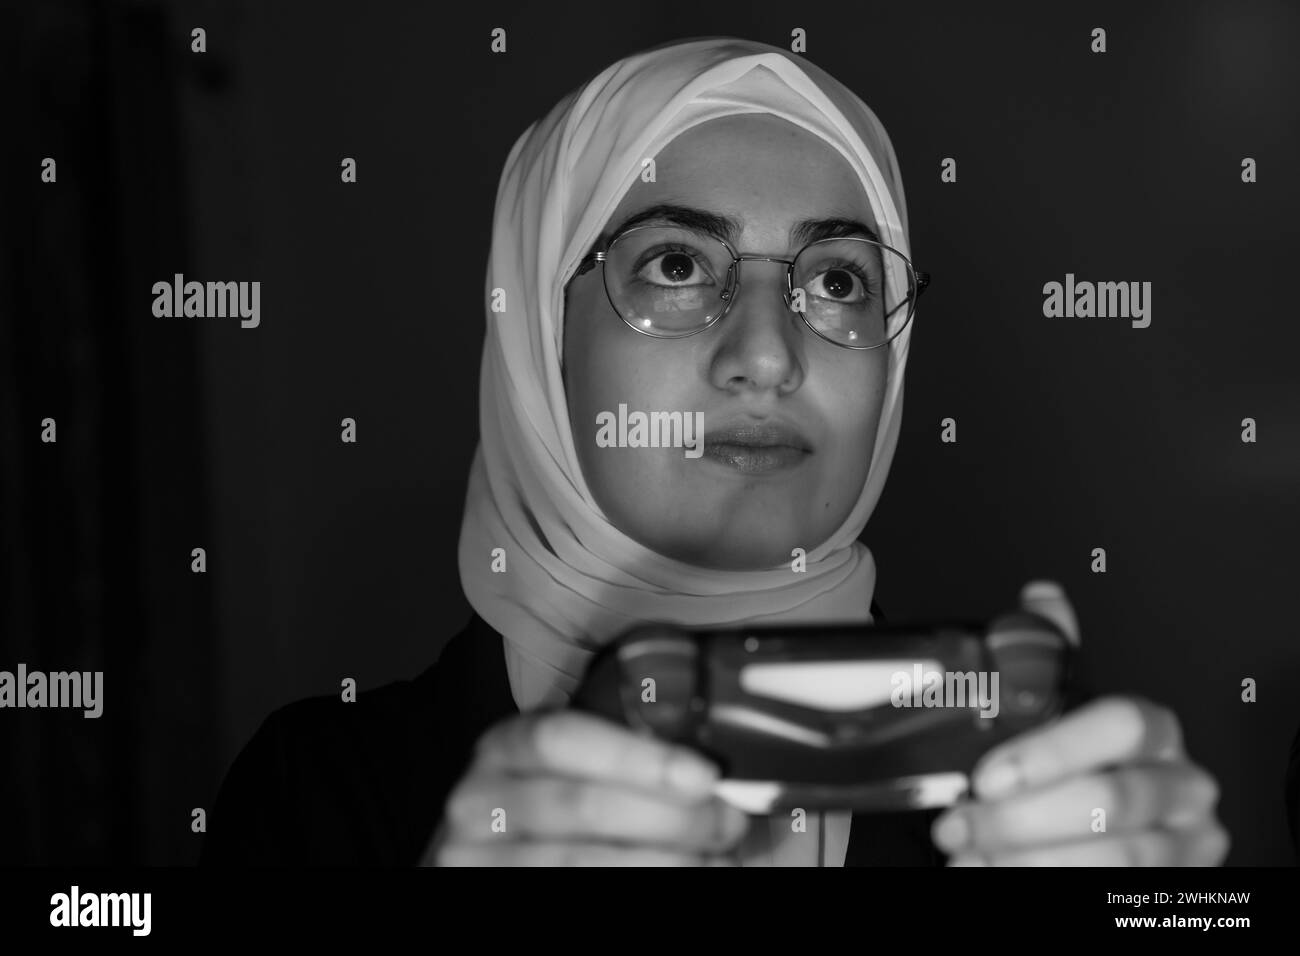 arabic muslim girl playing console games Stock Photo